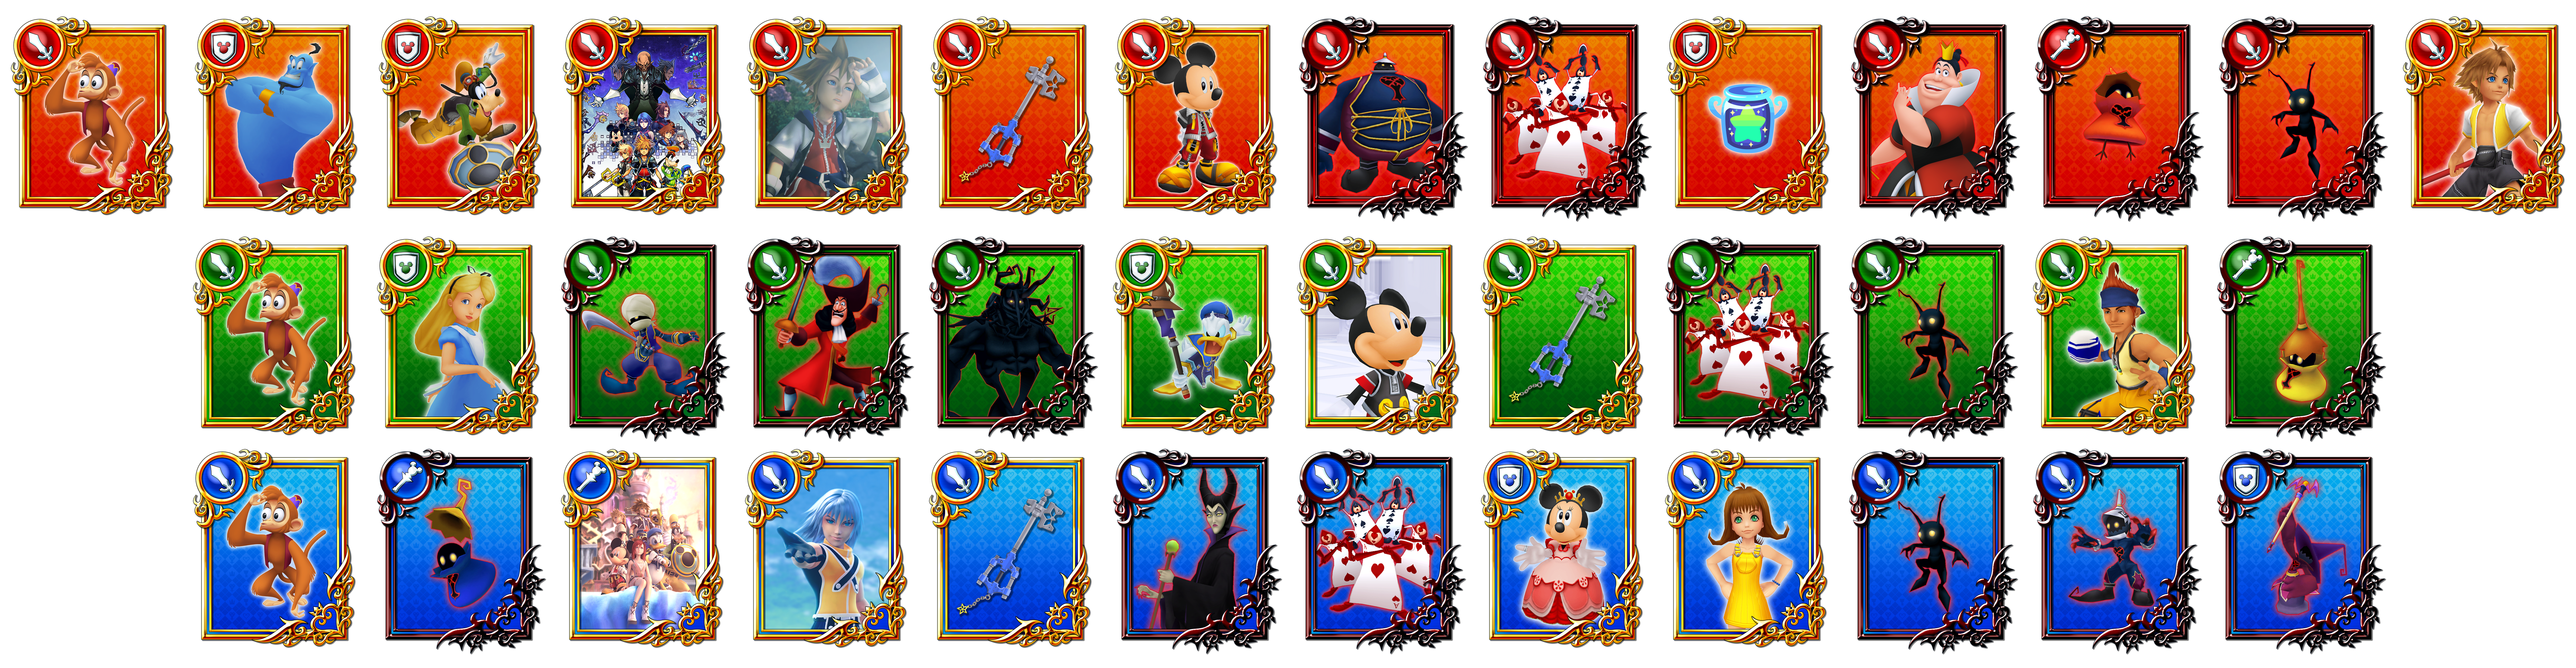 Kingdom Hearts Union χ - Card Set 01